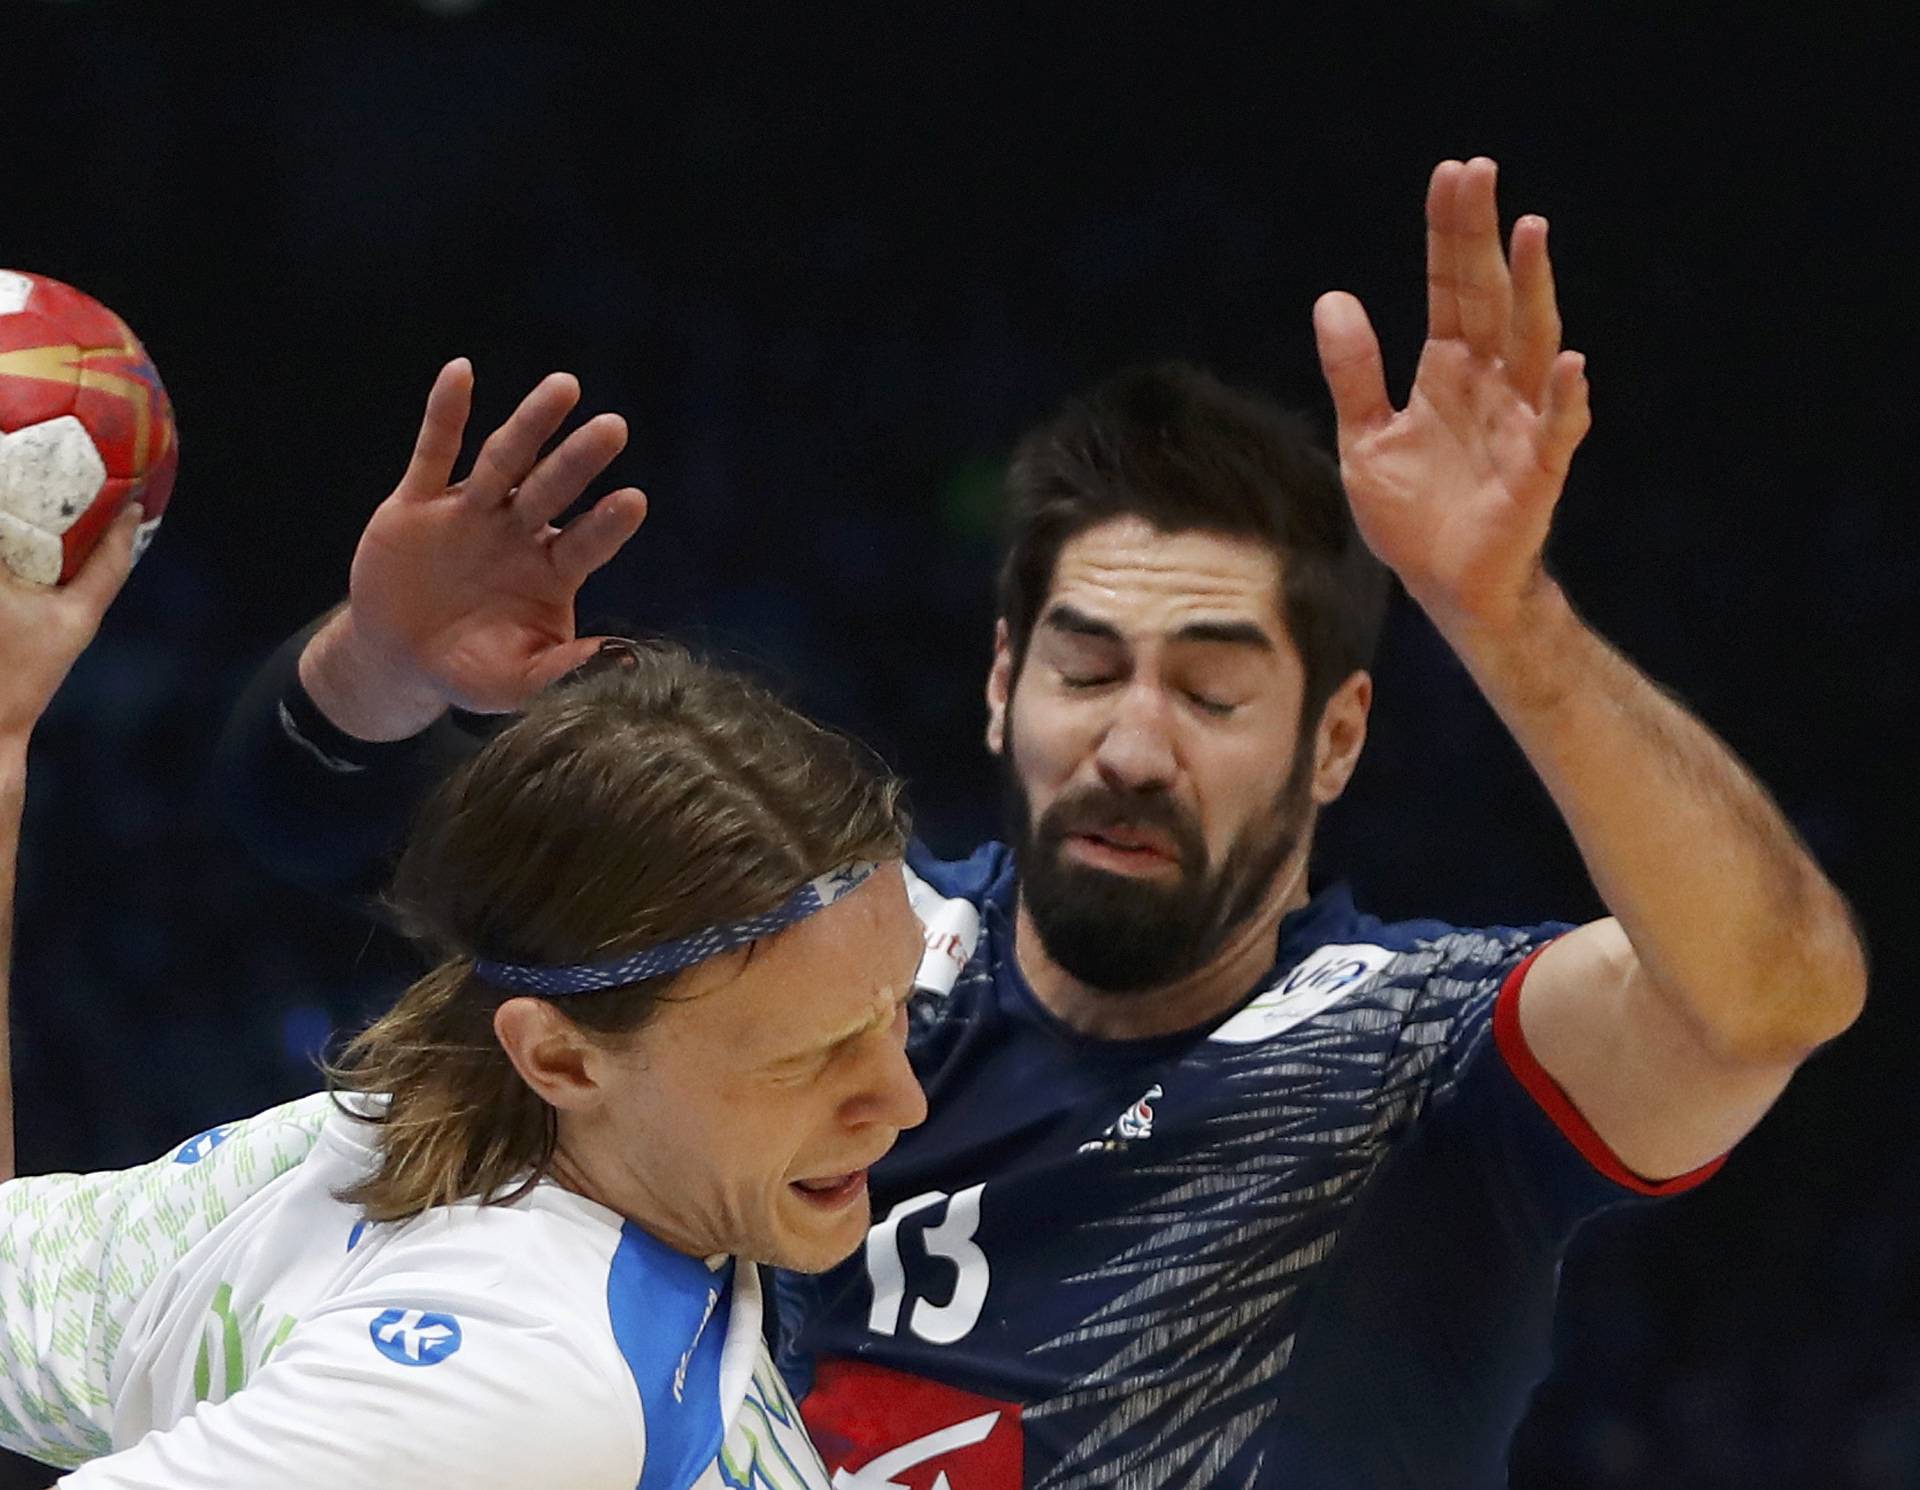 Men's Handball - France v Slovenia - 2017 Men's World Championship, Semi-Finals